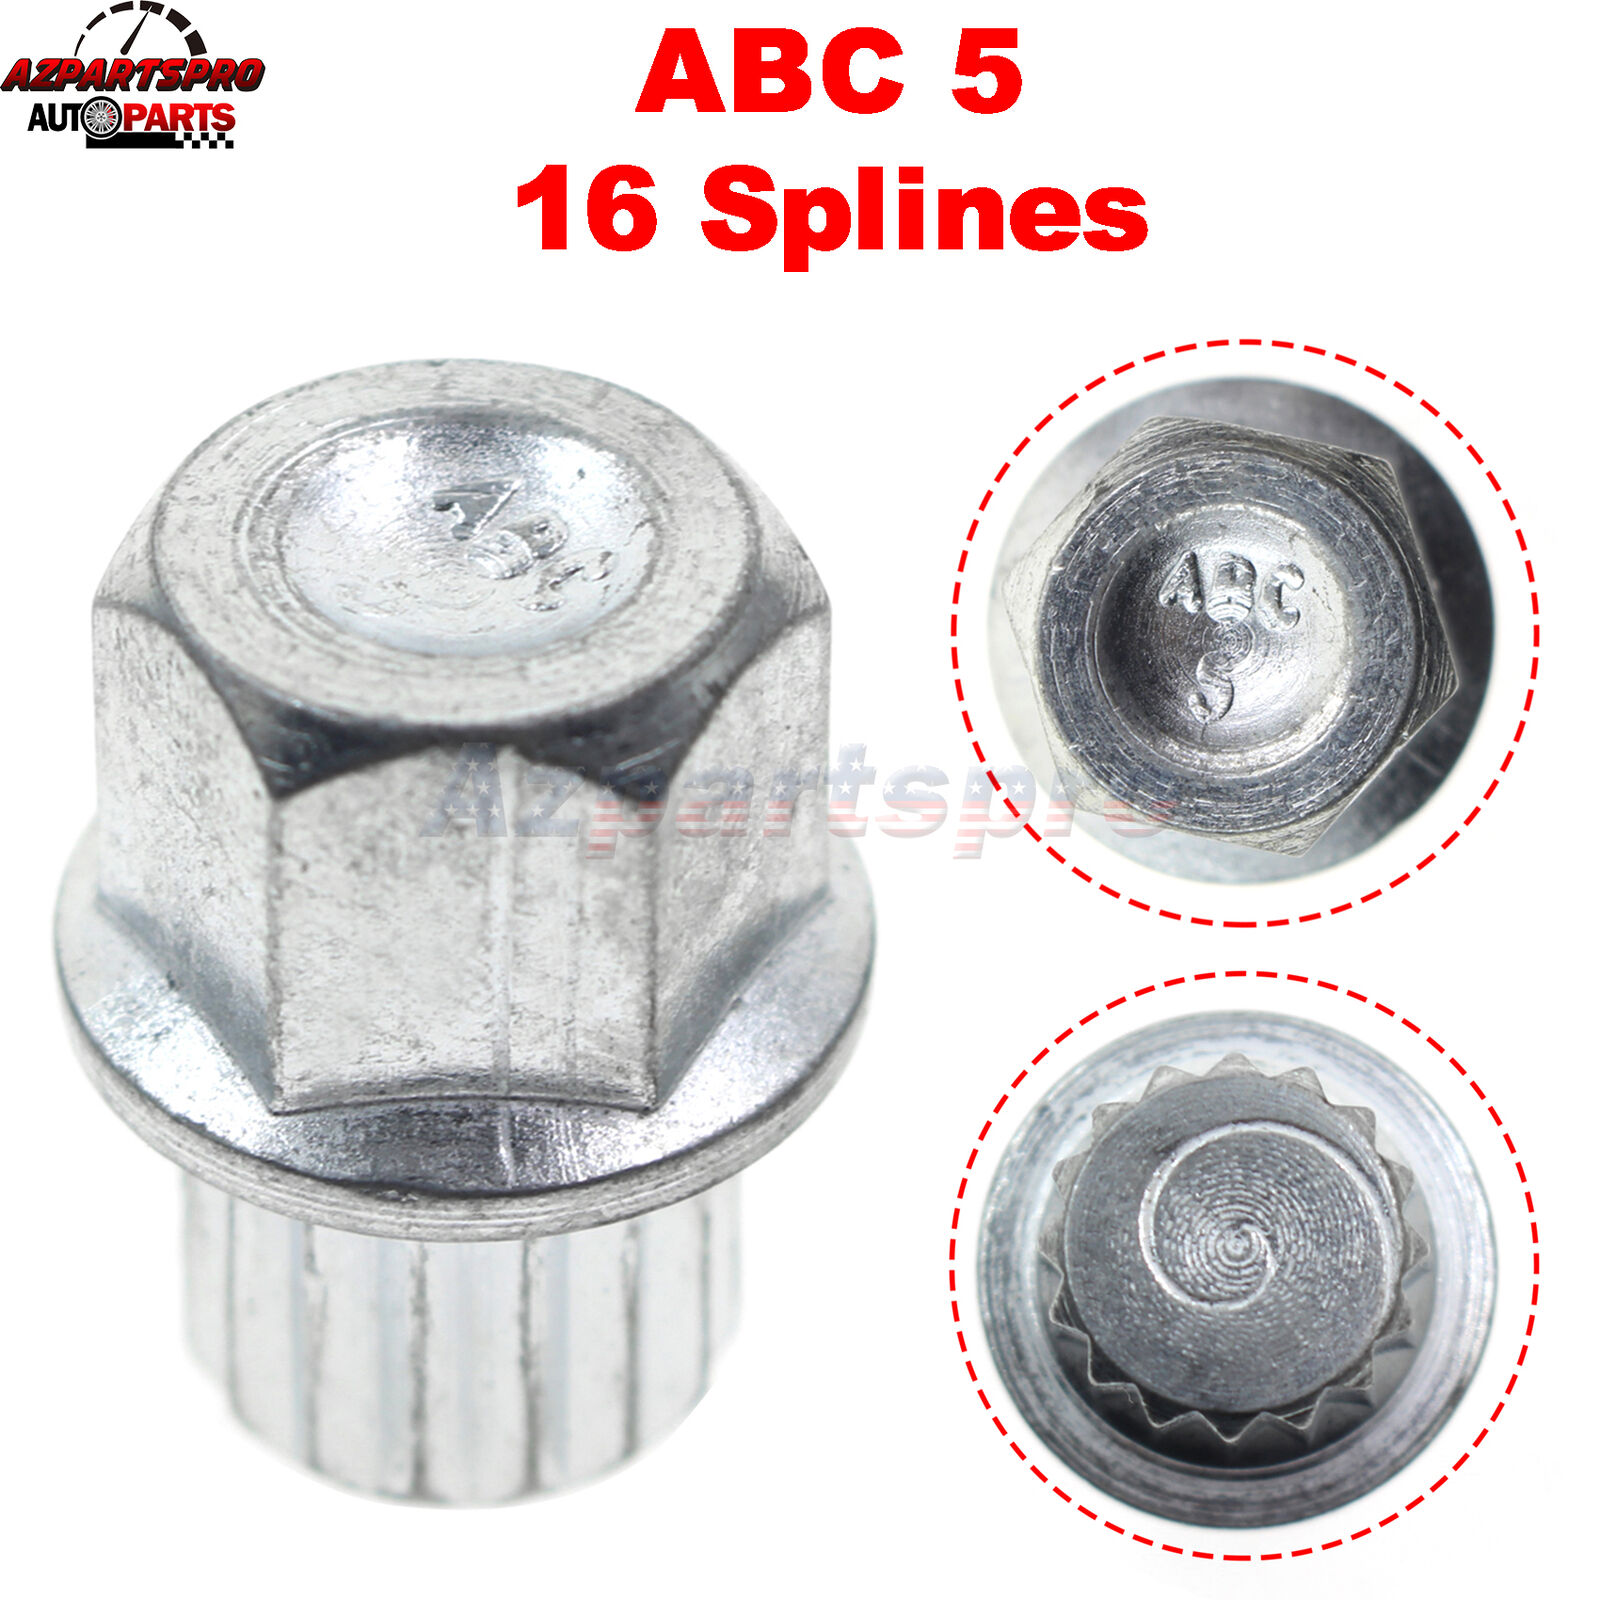 Wheel Lock Key 16 splines / ABC 5 for Volkswagen VW Audi ( 16 pointed splines )